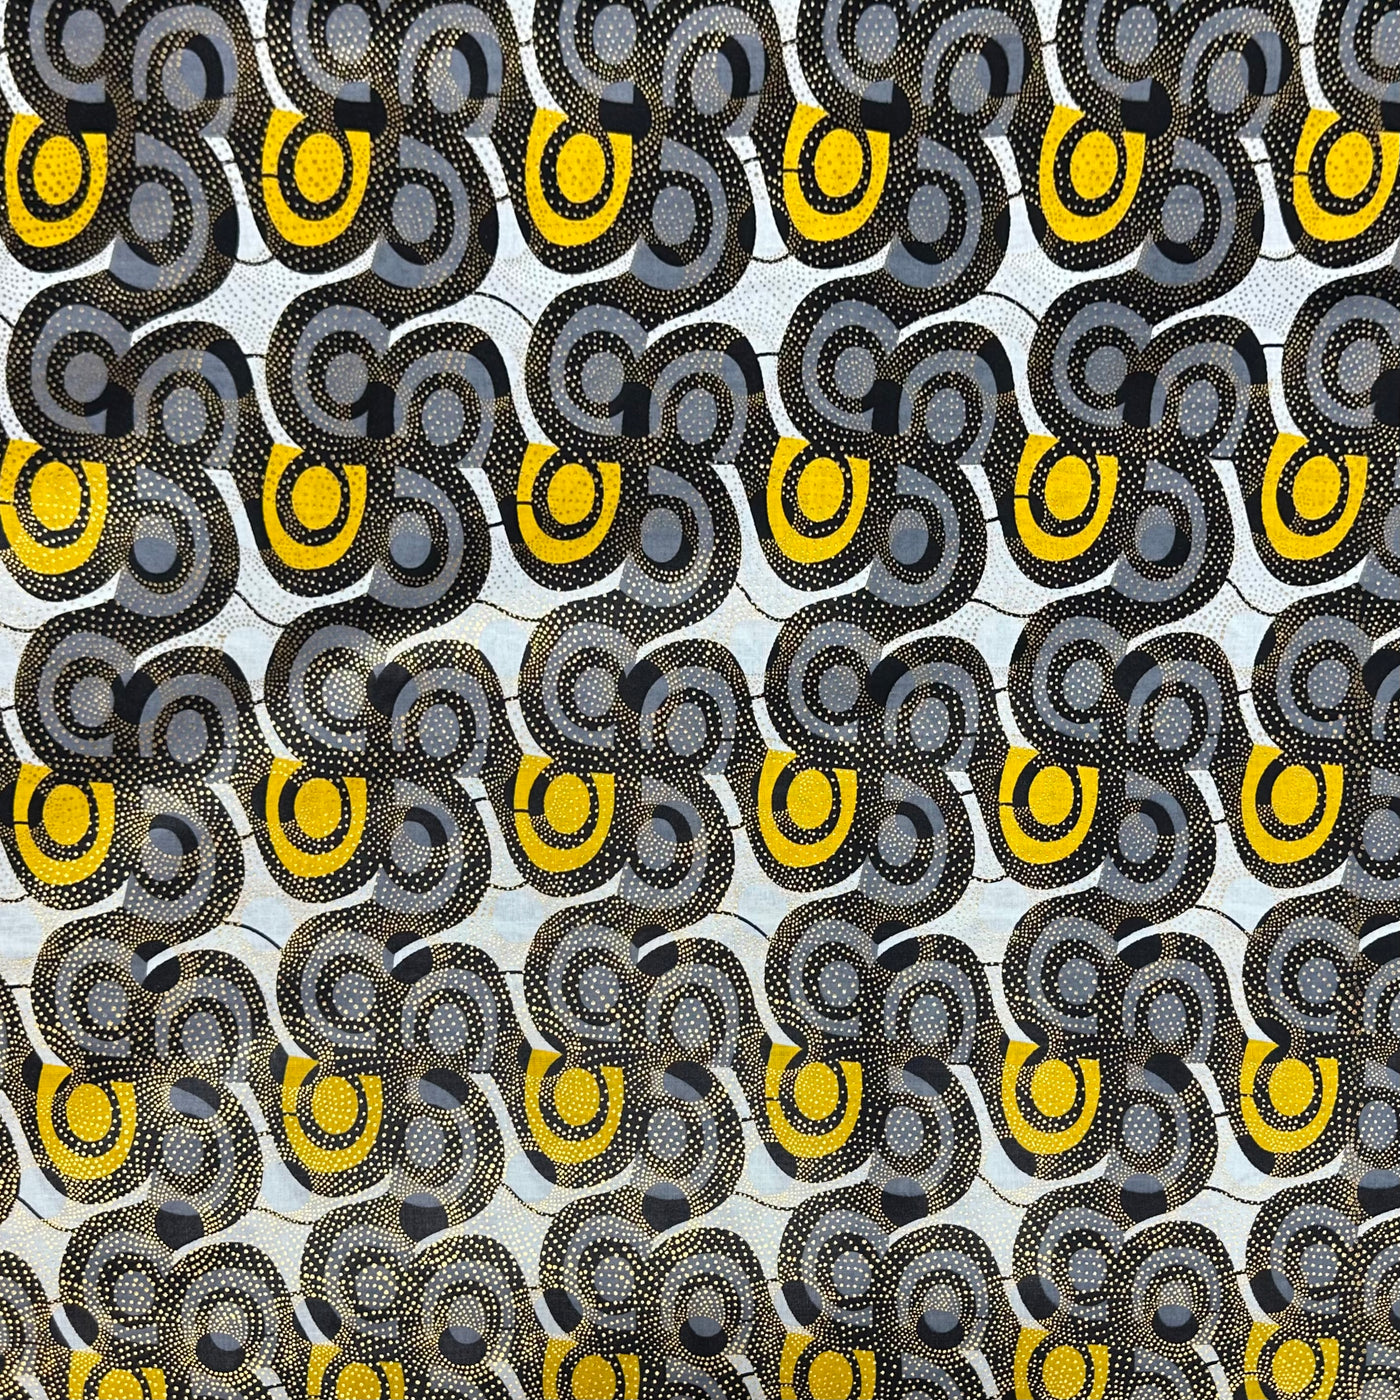 Waxed African Printed Cotton - Metallic Gold/Grey/Black/Yellow